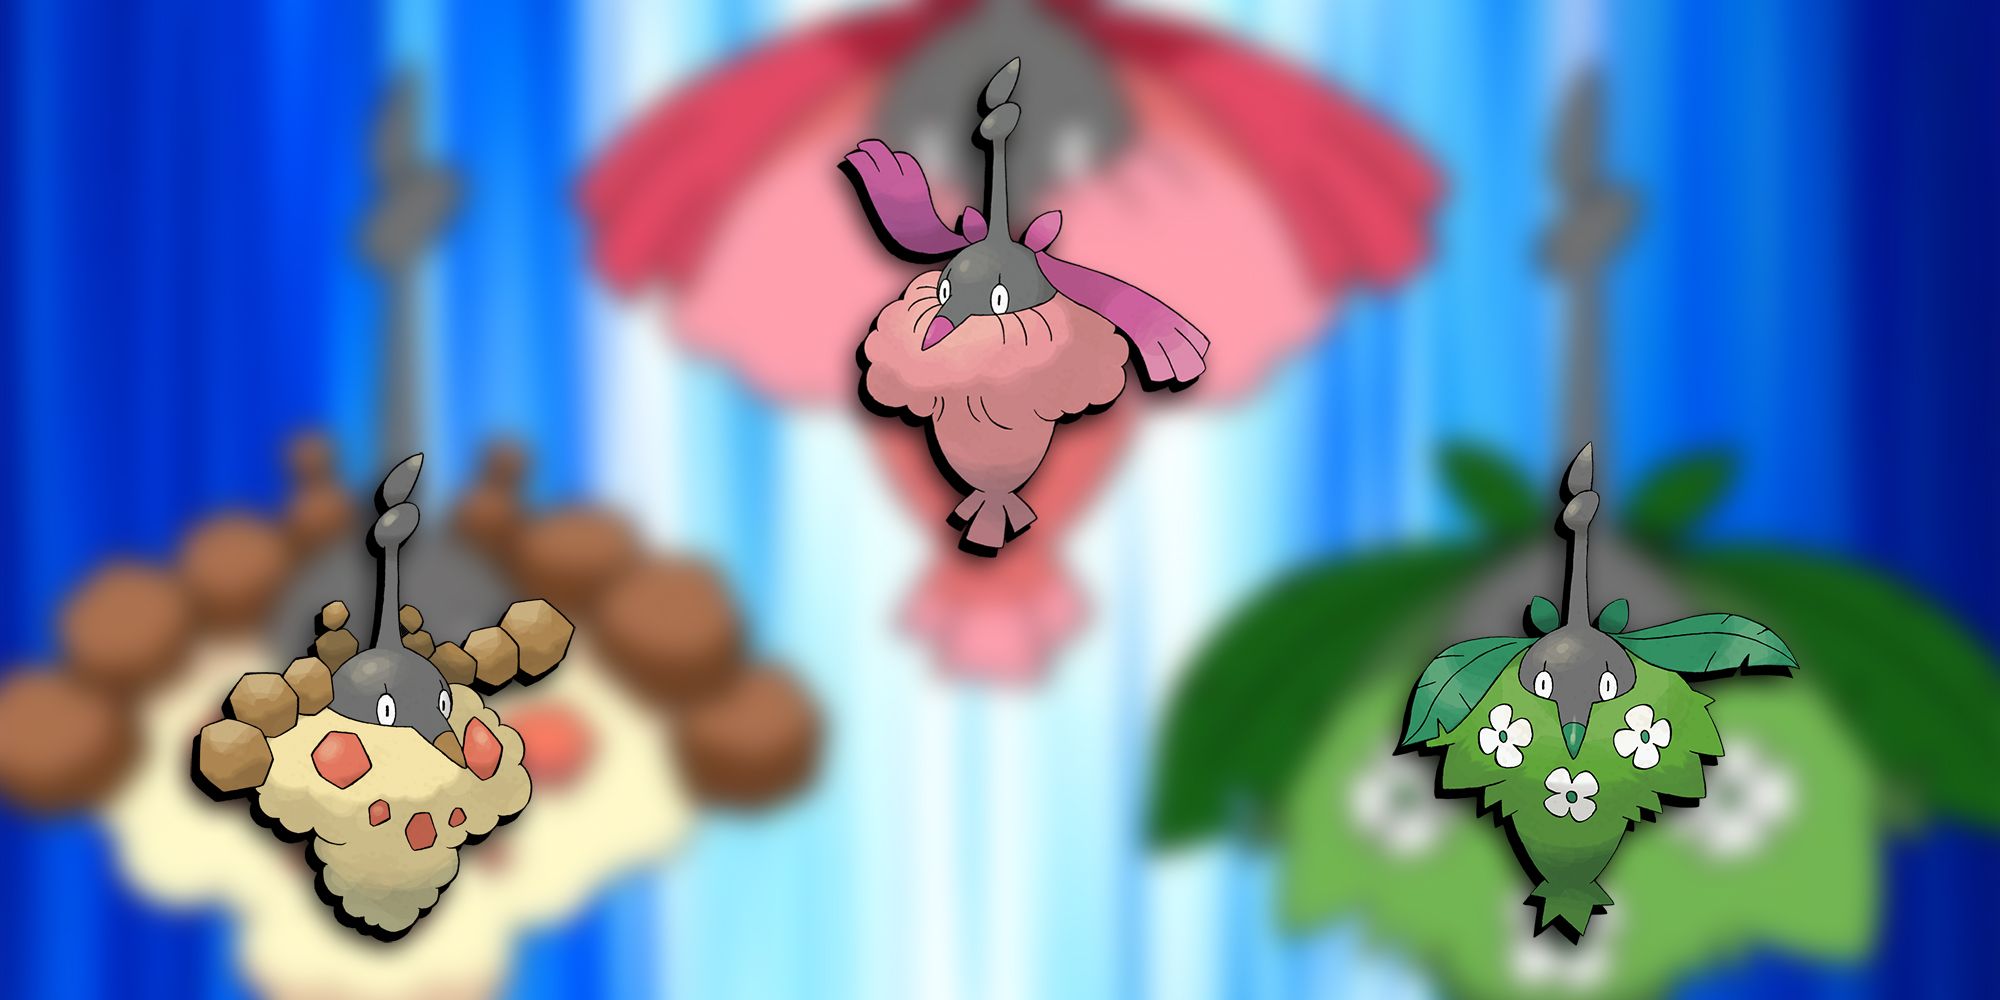 Pokemon - All Three Wormadam Forms Overlaid On Image of Wormadam from Pokemon Anime